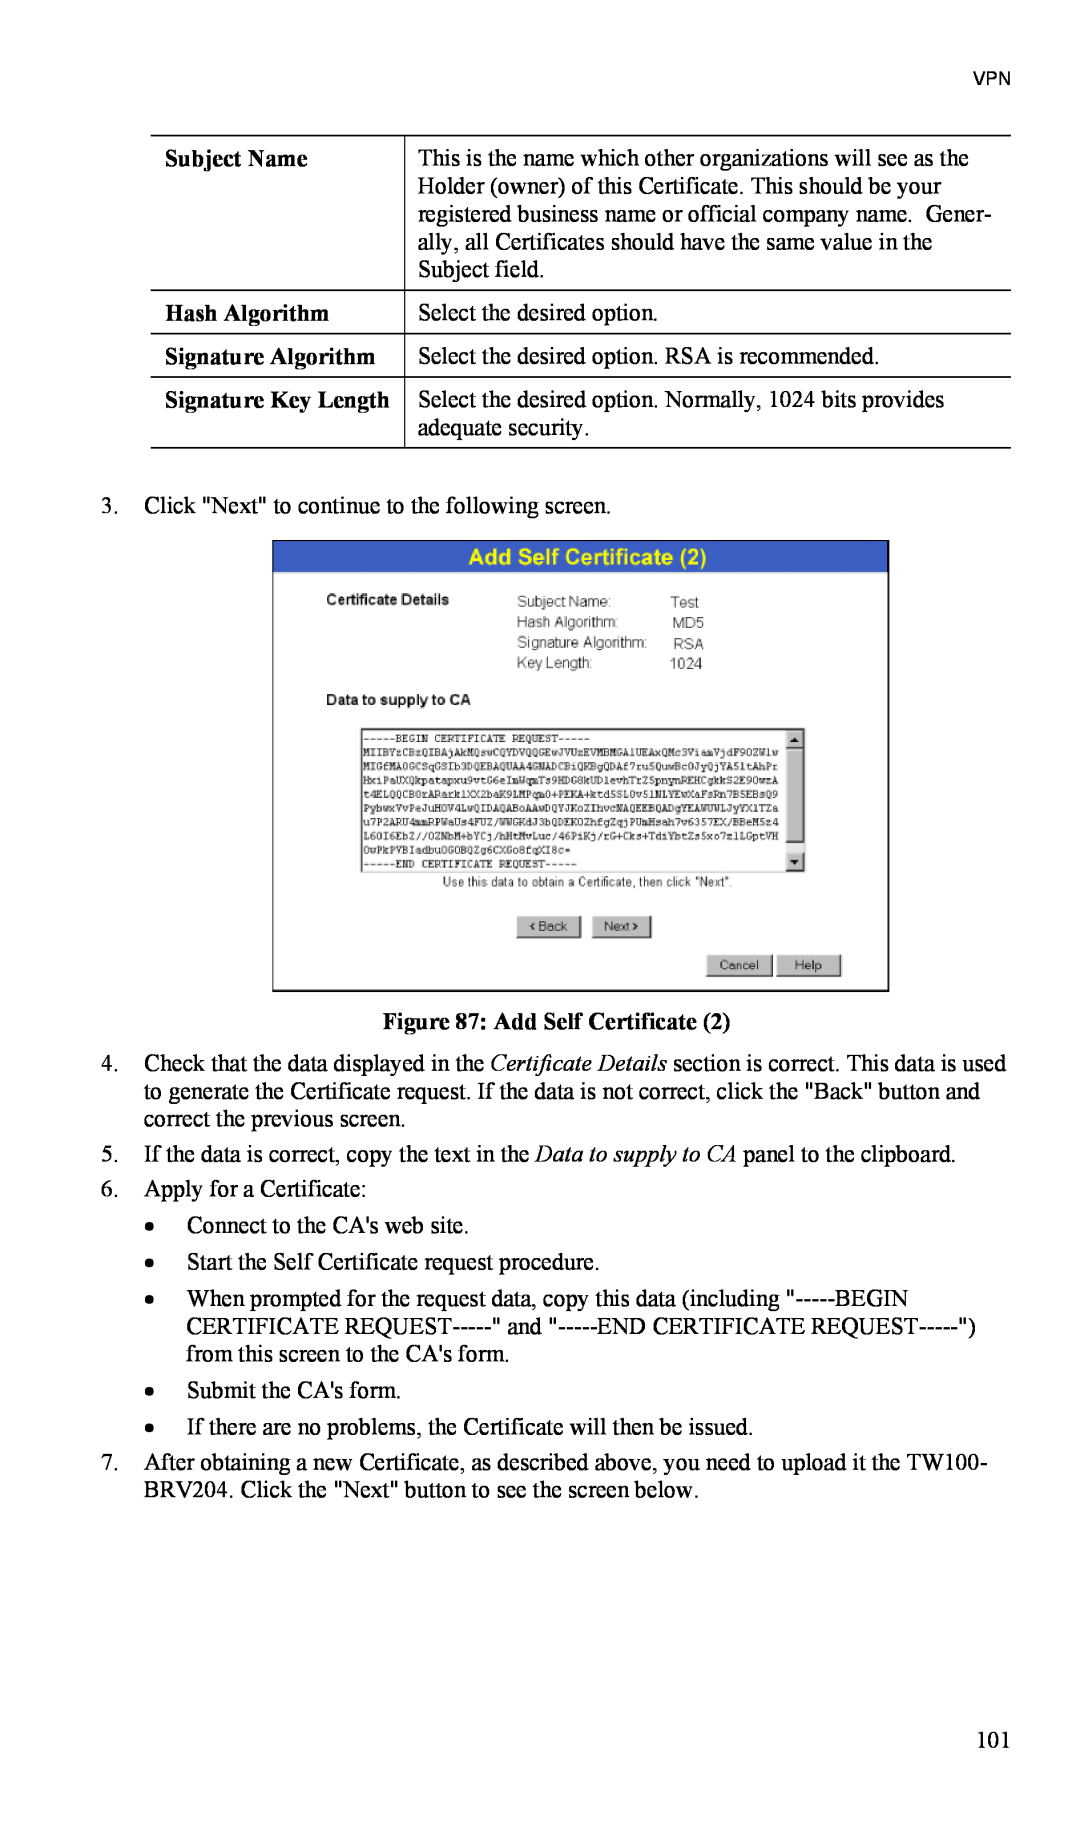 TRENDnet TW100-BRV204 manual Subject Name, Hash Algorithm, Signature Algorithm, Signature Key Length, Add Self Certificate 